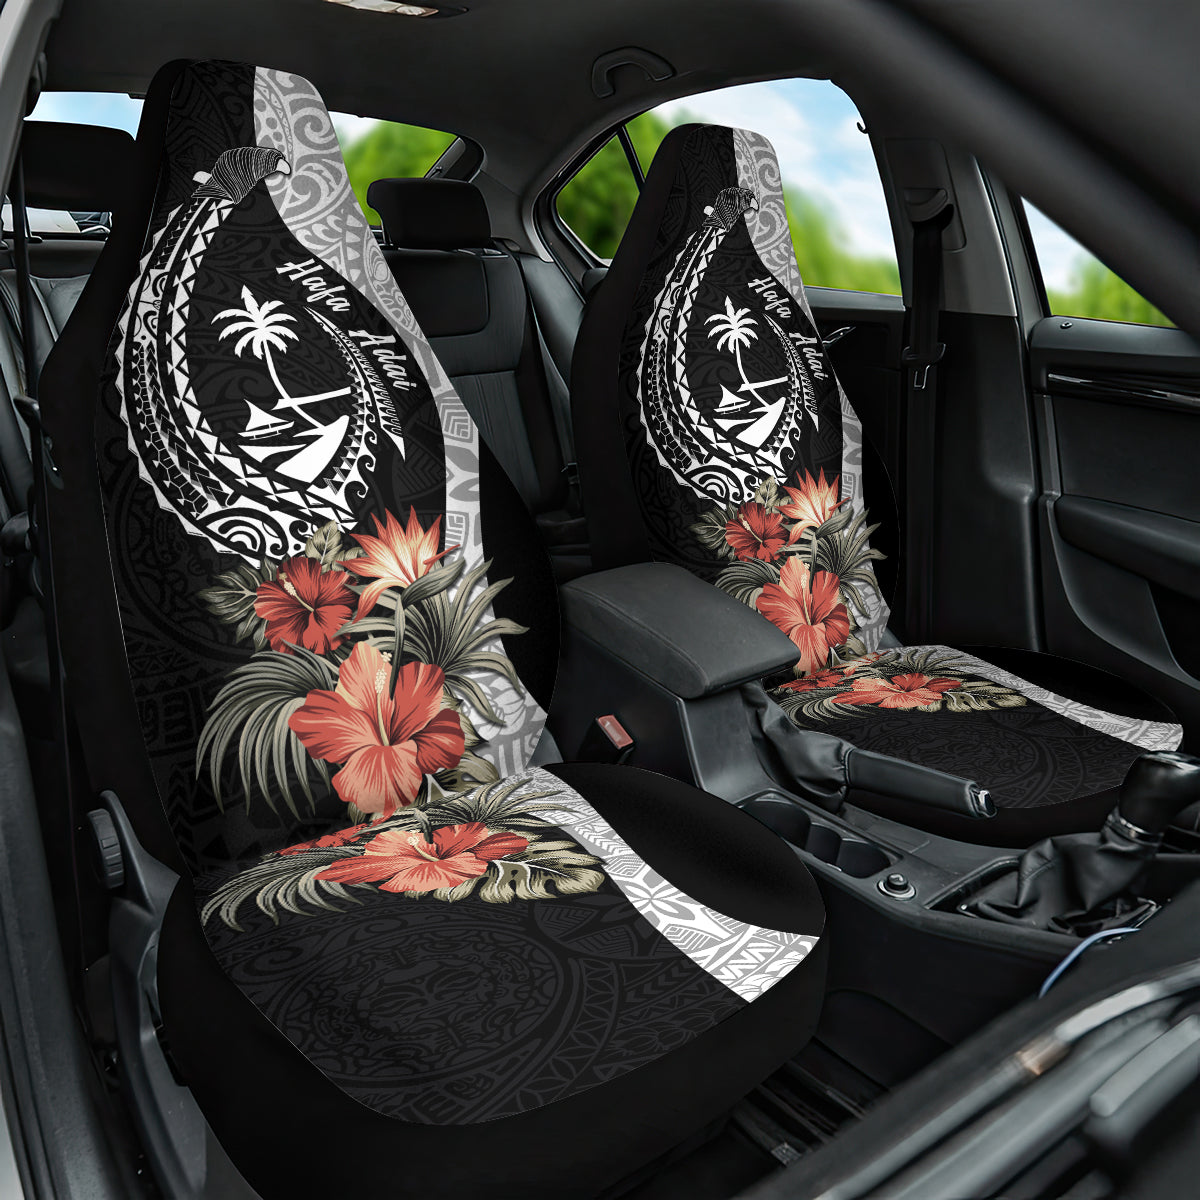 Hafa Adai Guam Car Seat Cover Tropical Flowers with Polynesian Pattern LT9 One Size Black - Polynesian Pride